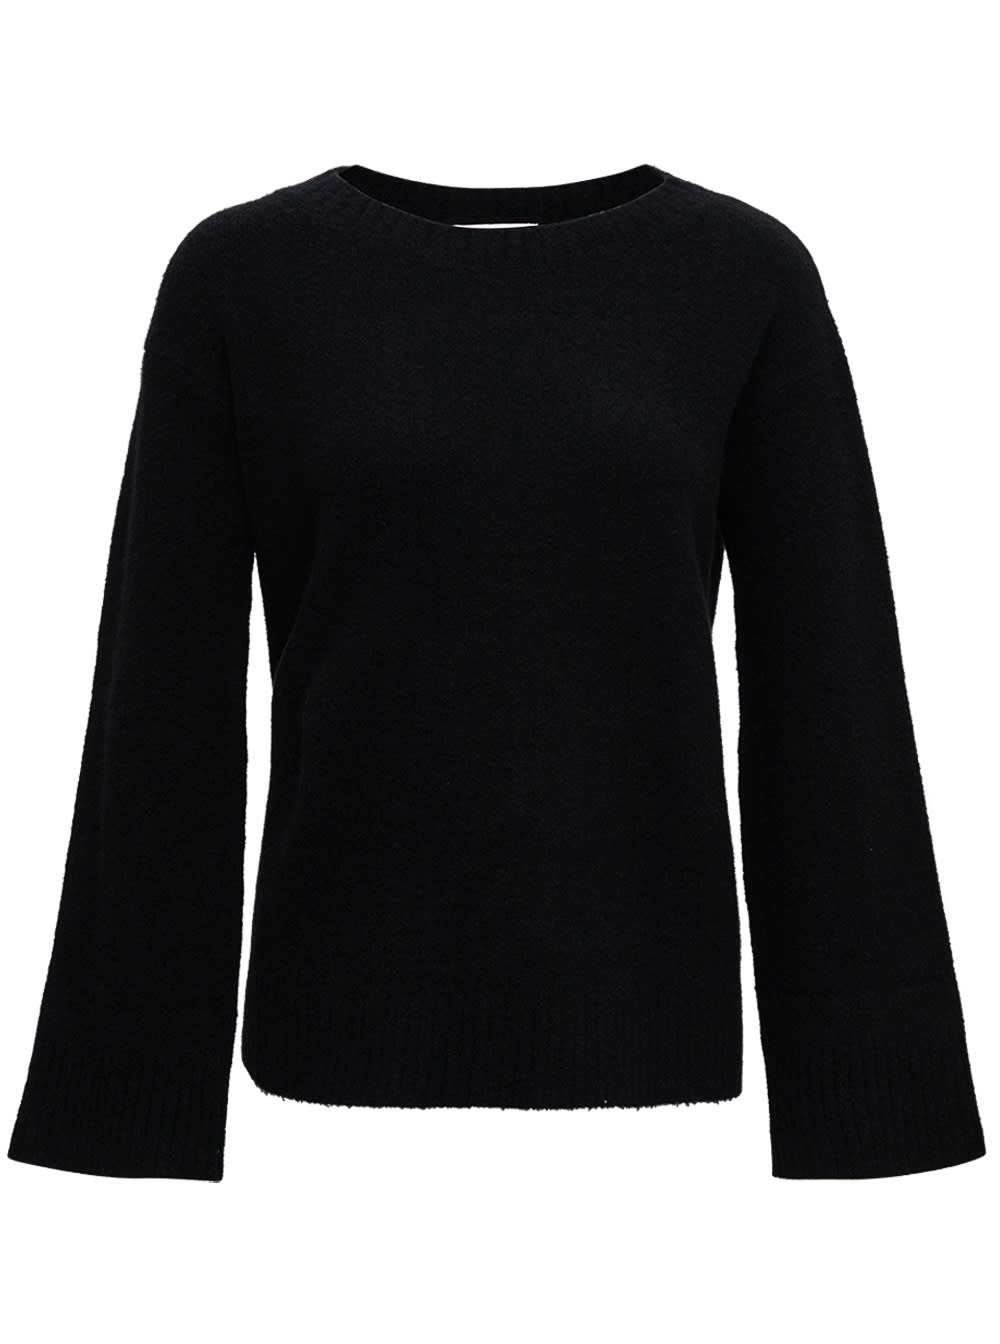 Max Mara Black Long-sleeved Sweater In Wool Blend